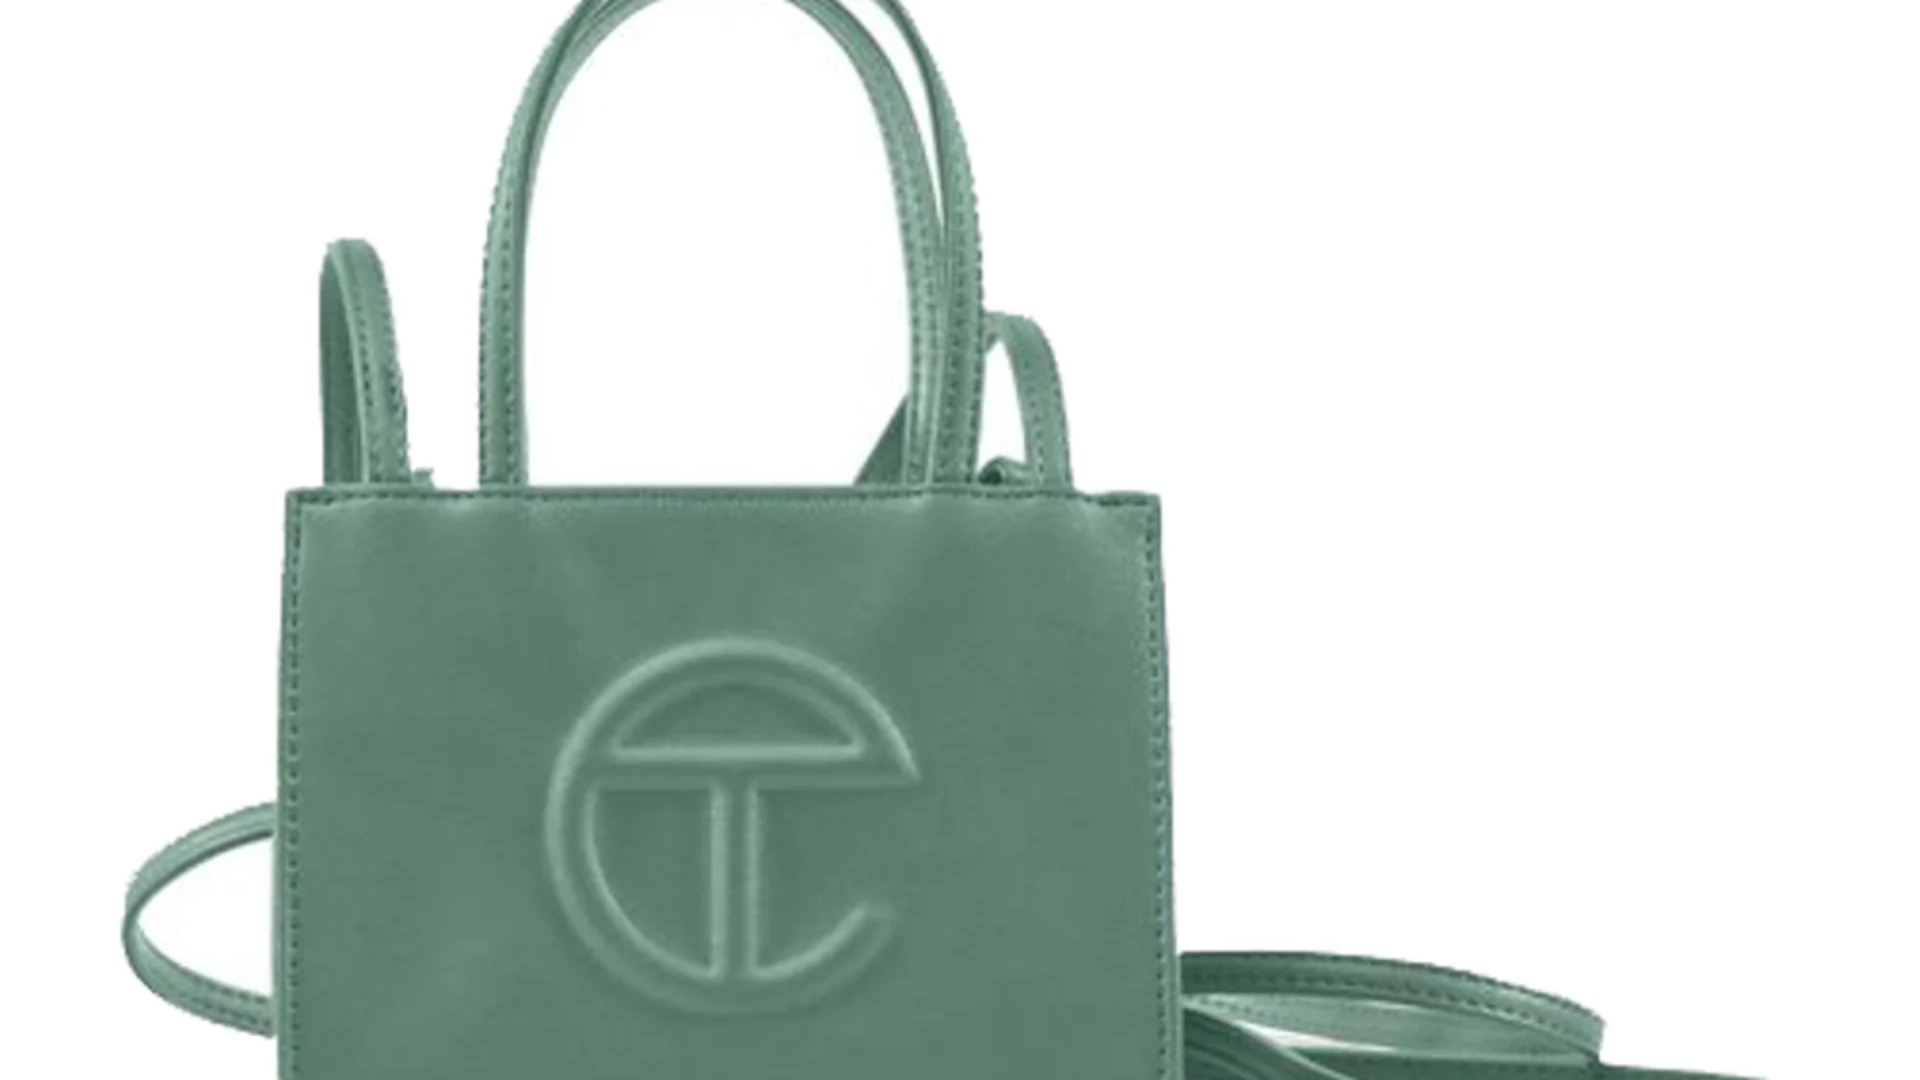 How To Buy Telfar's It-Bag 2021 - Telfar's Bag Security Program